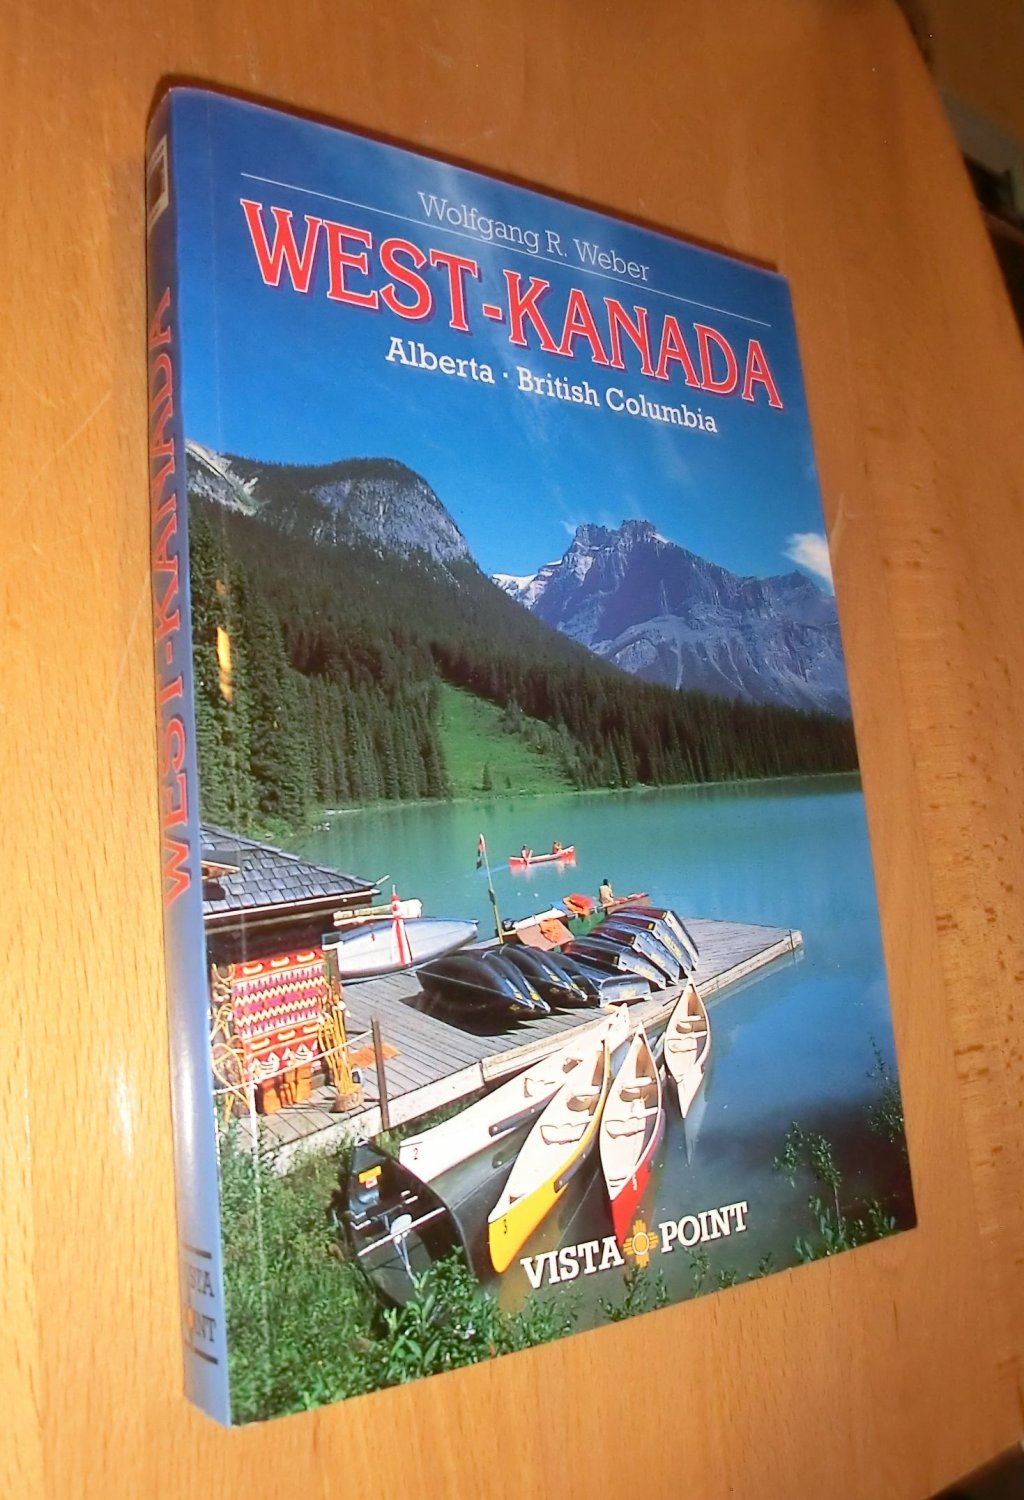 West- Kanada - Weber, Wolfgang R.